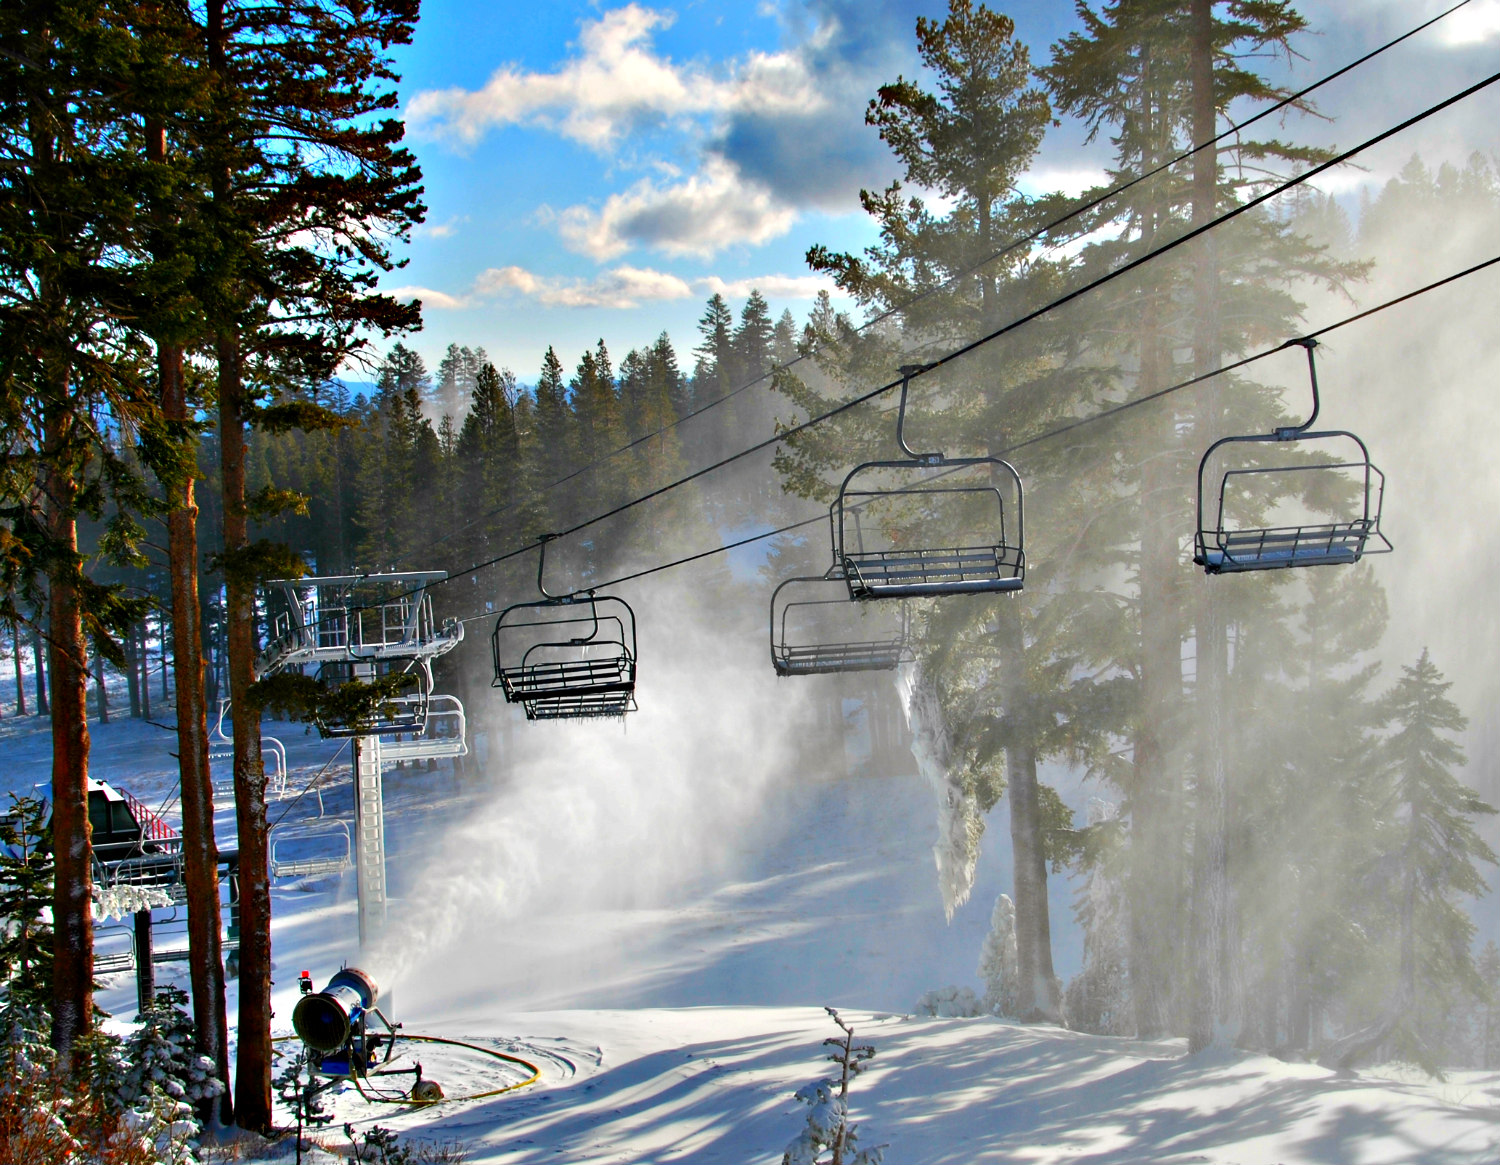 Mt. Rose ski resort announces Nov. 7 opening